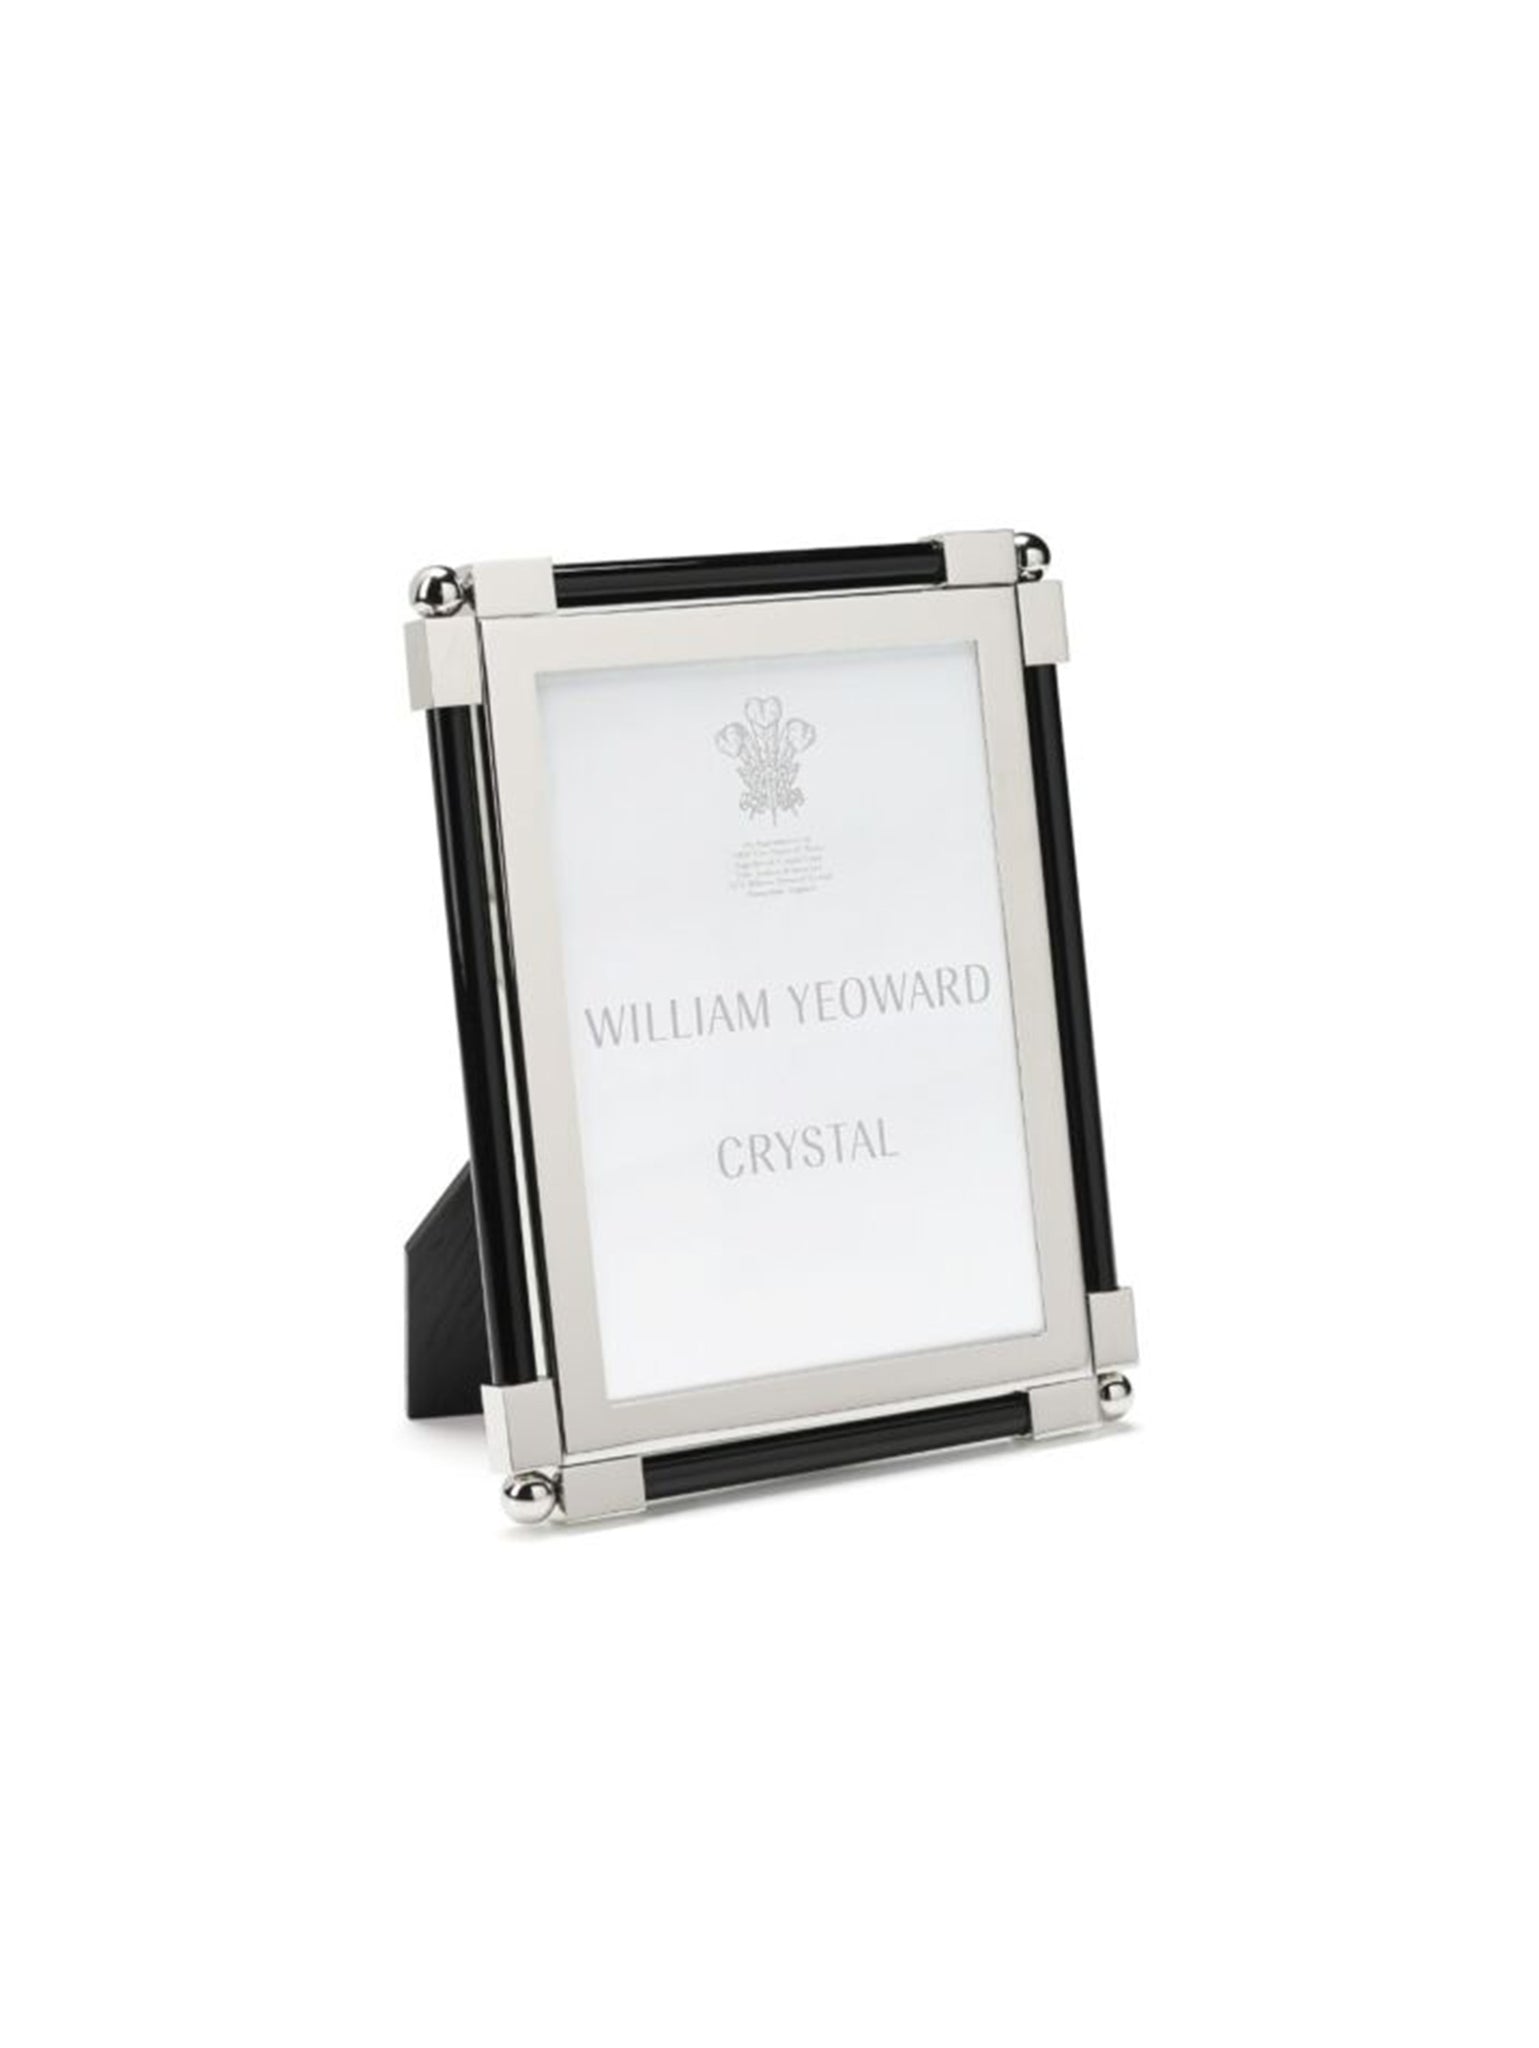 William Yeoward Crystal Classic Black Photo Frame 5 x 7 Weston Table